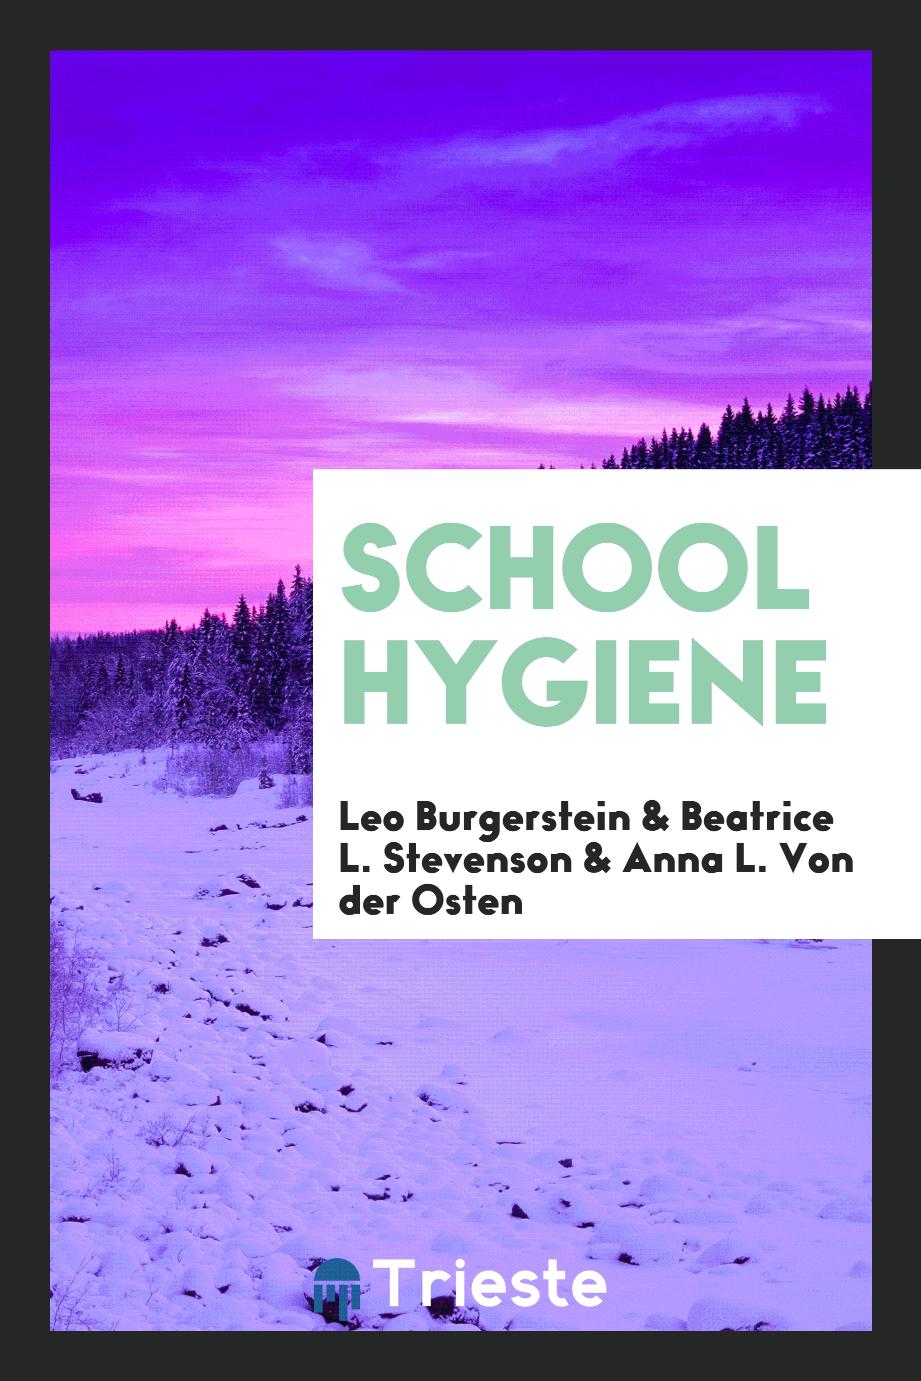 School hygiene